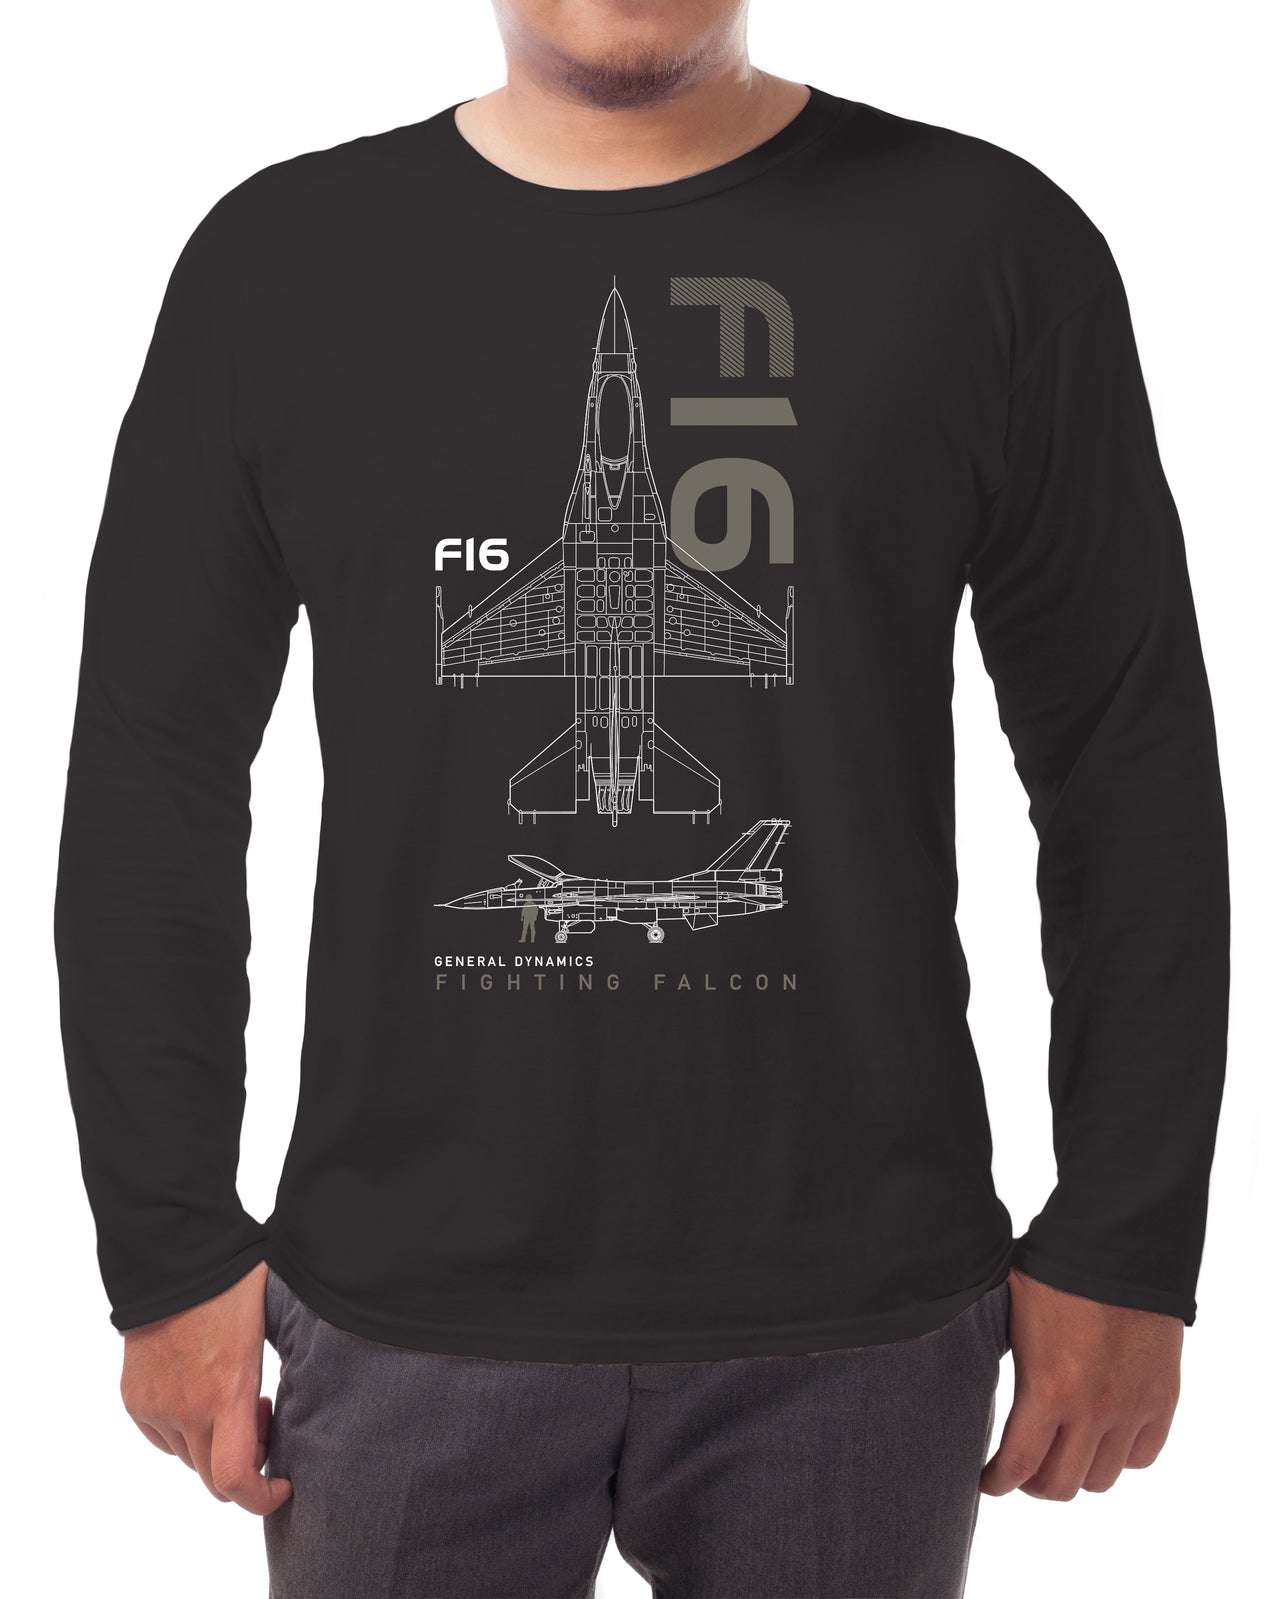 F-16 Fighting Falcon - Long-sleeve T-shirt